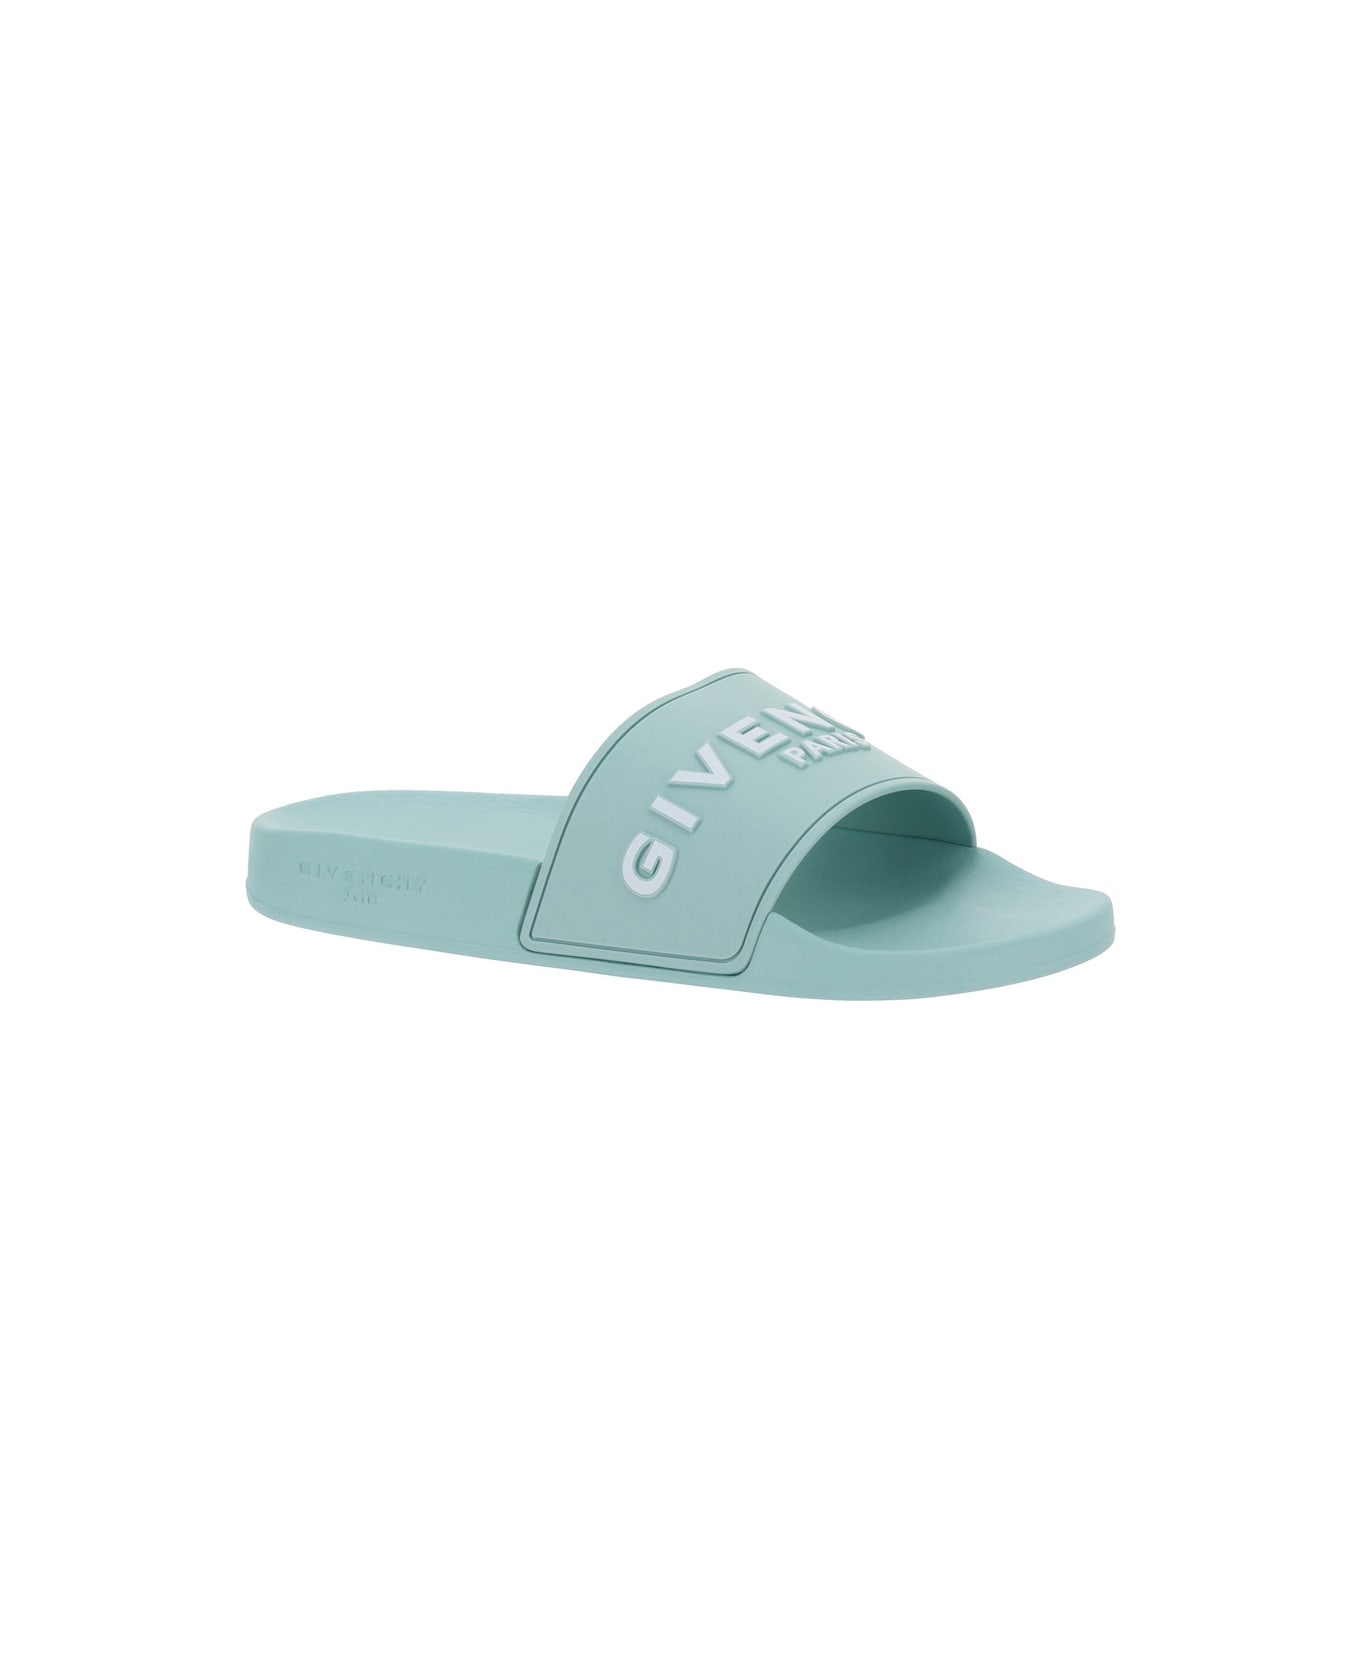 Givenchy Sandals - Celadon